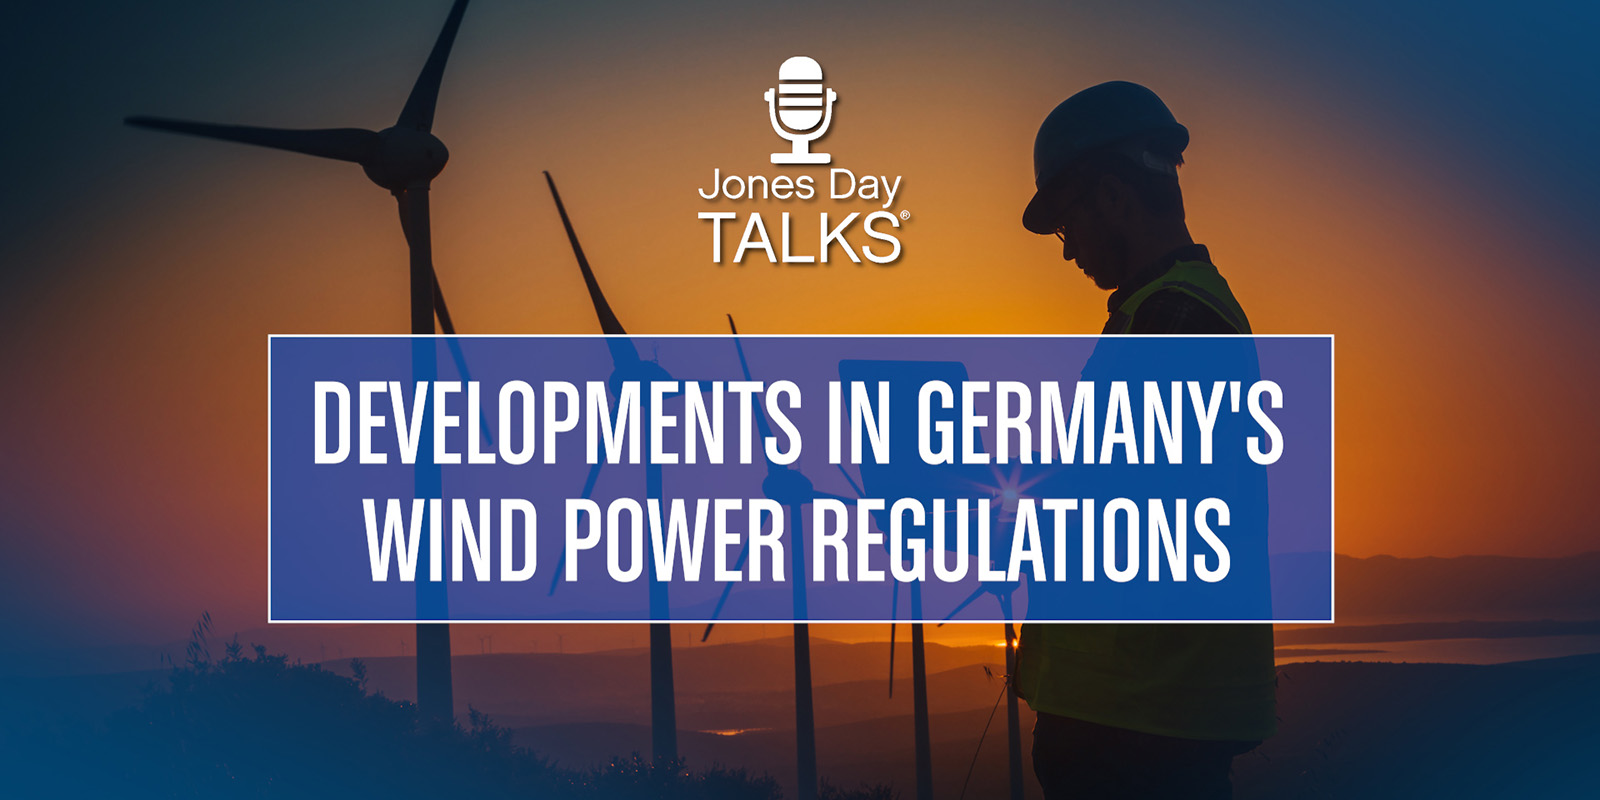 Jones Day Talks: Developments in Germany’s Wind Power Regulations